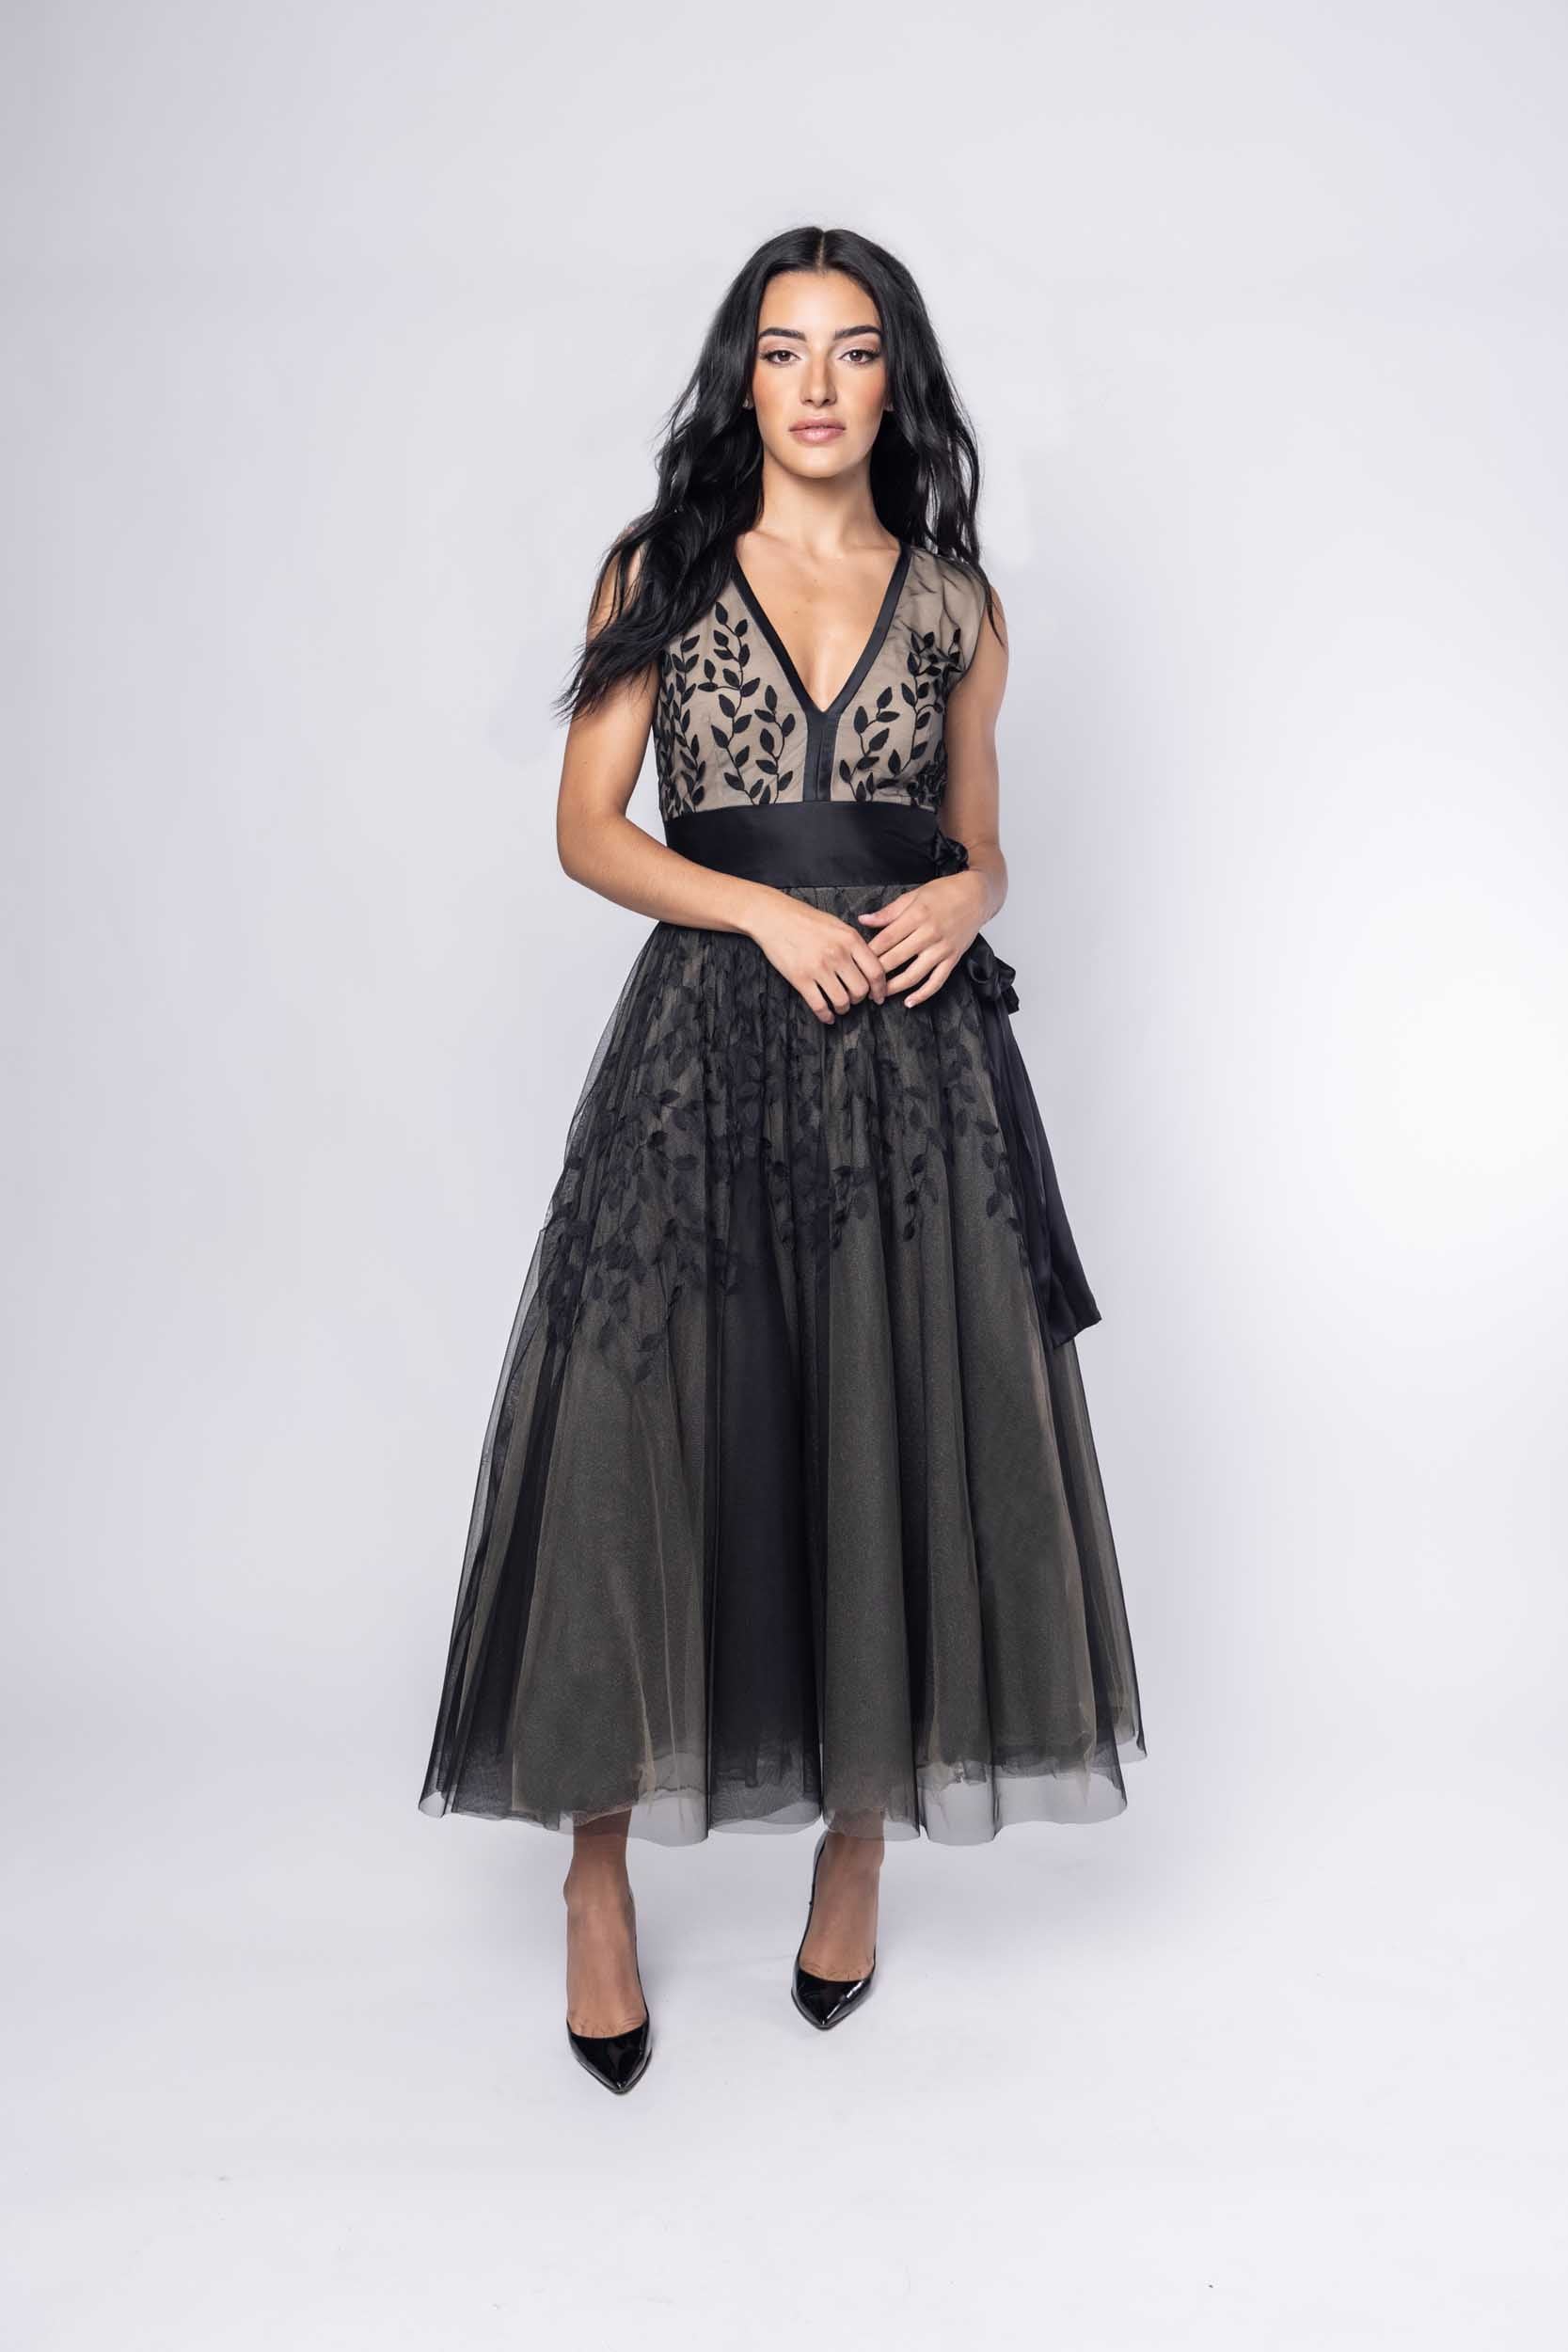 Beautiful model in an ornate black tea-length Sujata Gazder dress - front view